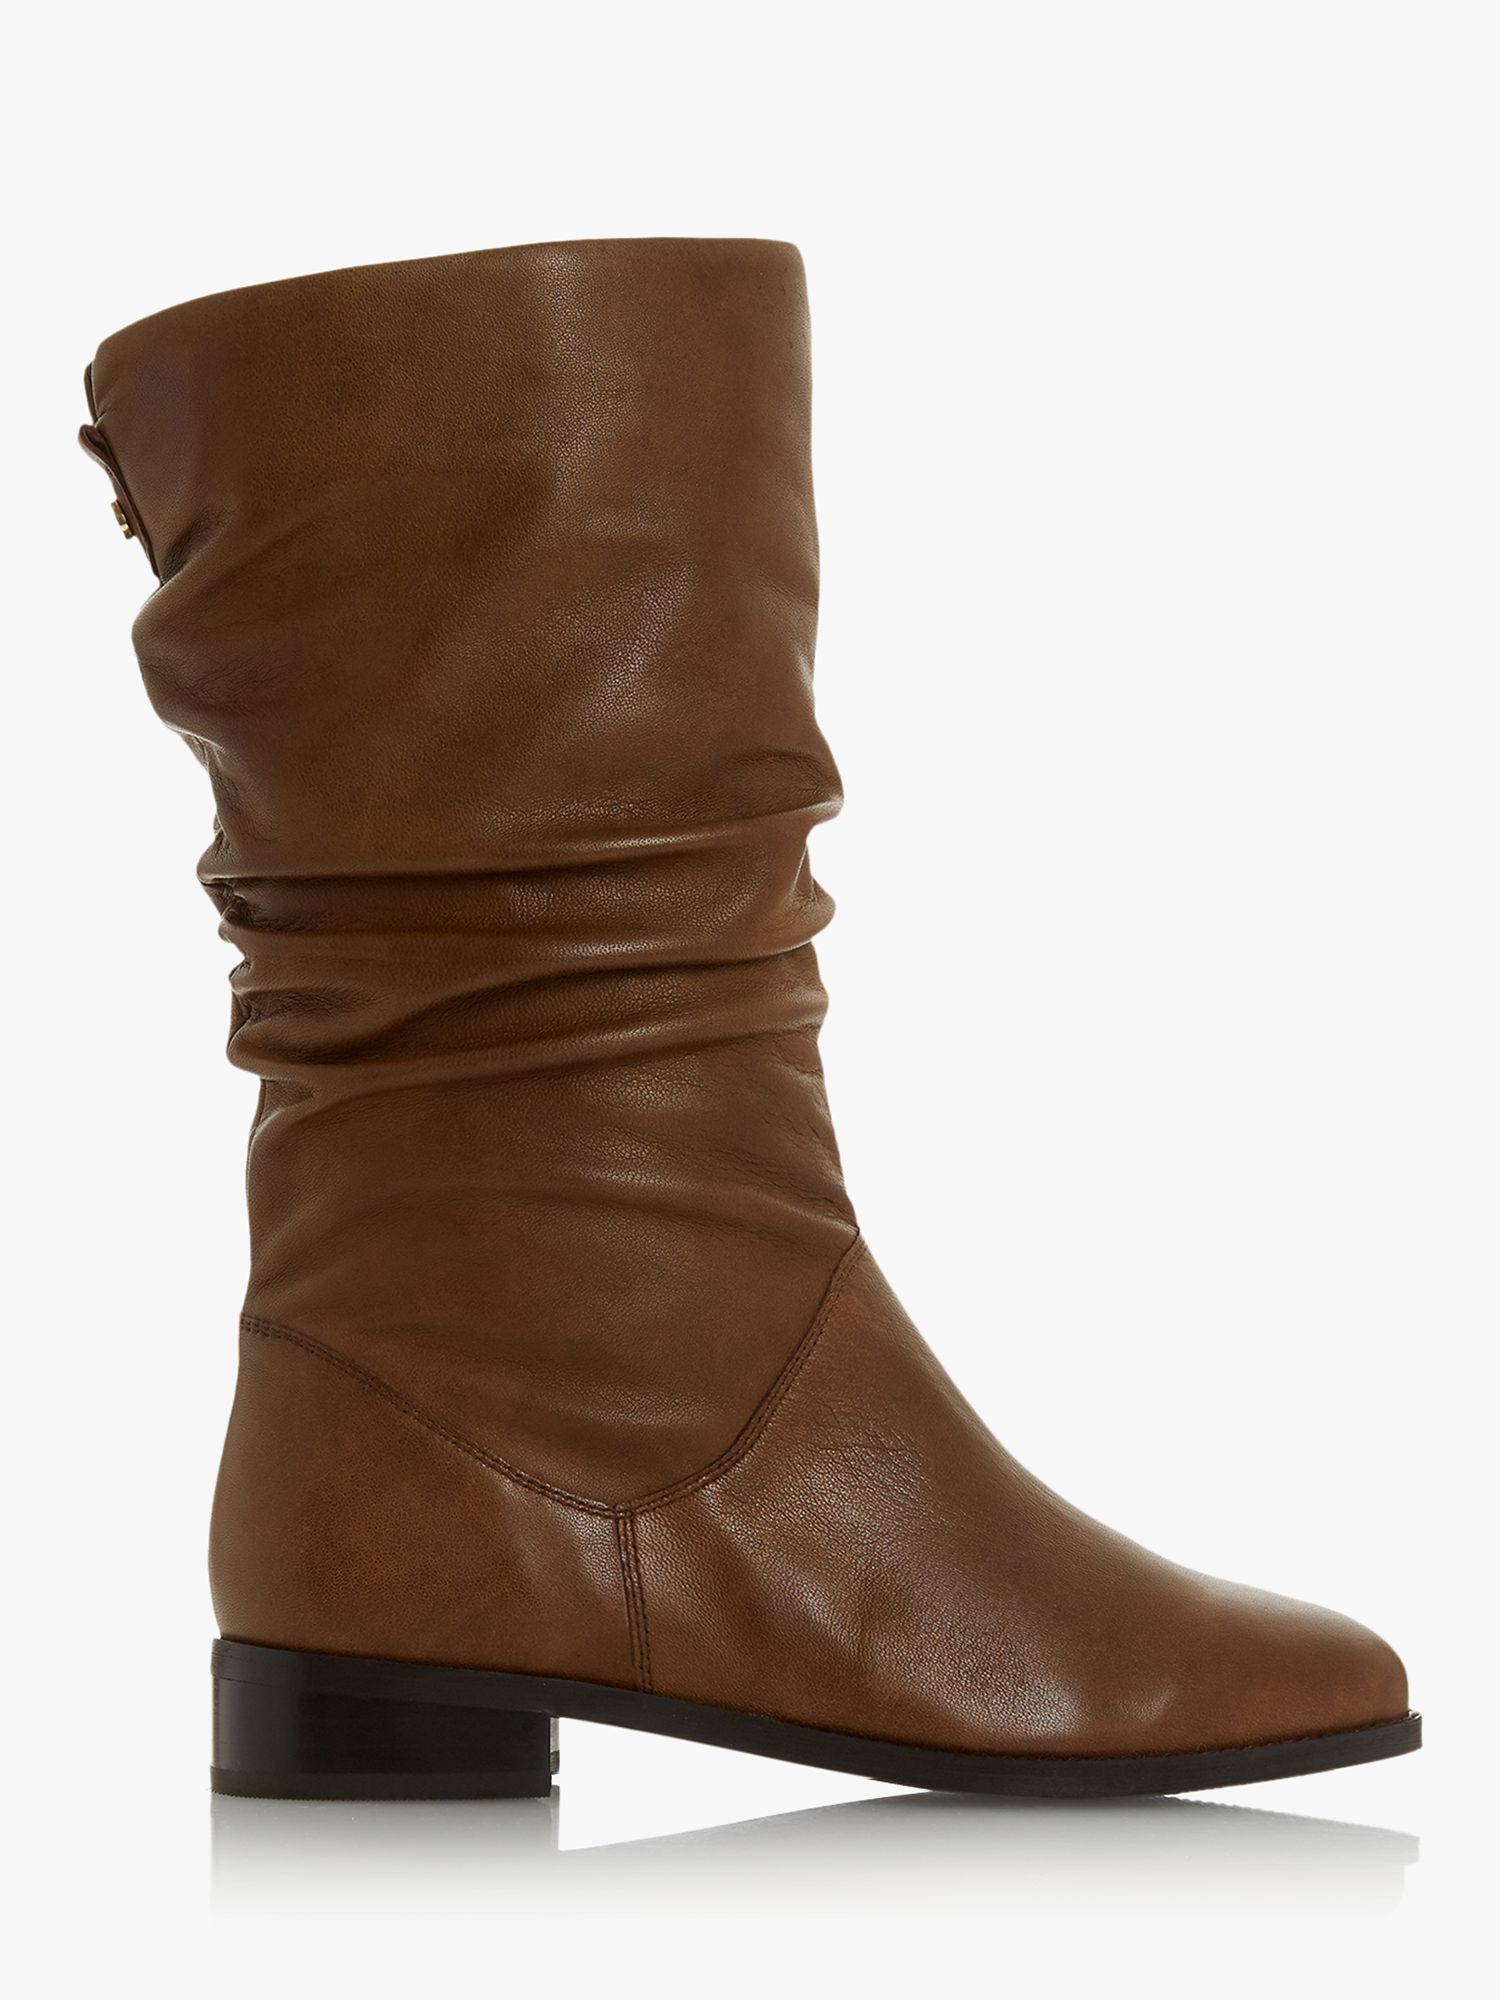 Dune Rosalinda Leather Calf Boots, Tan 